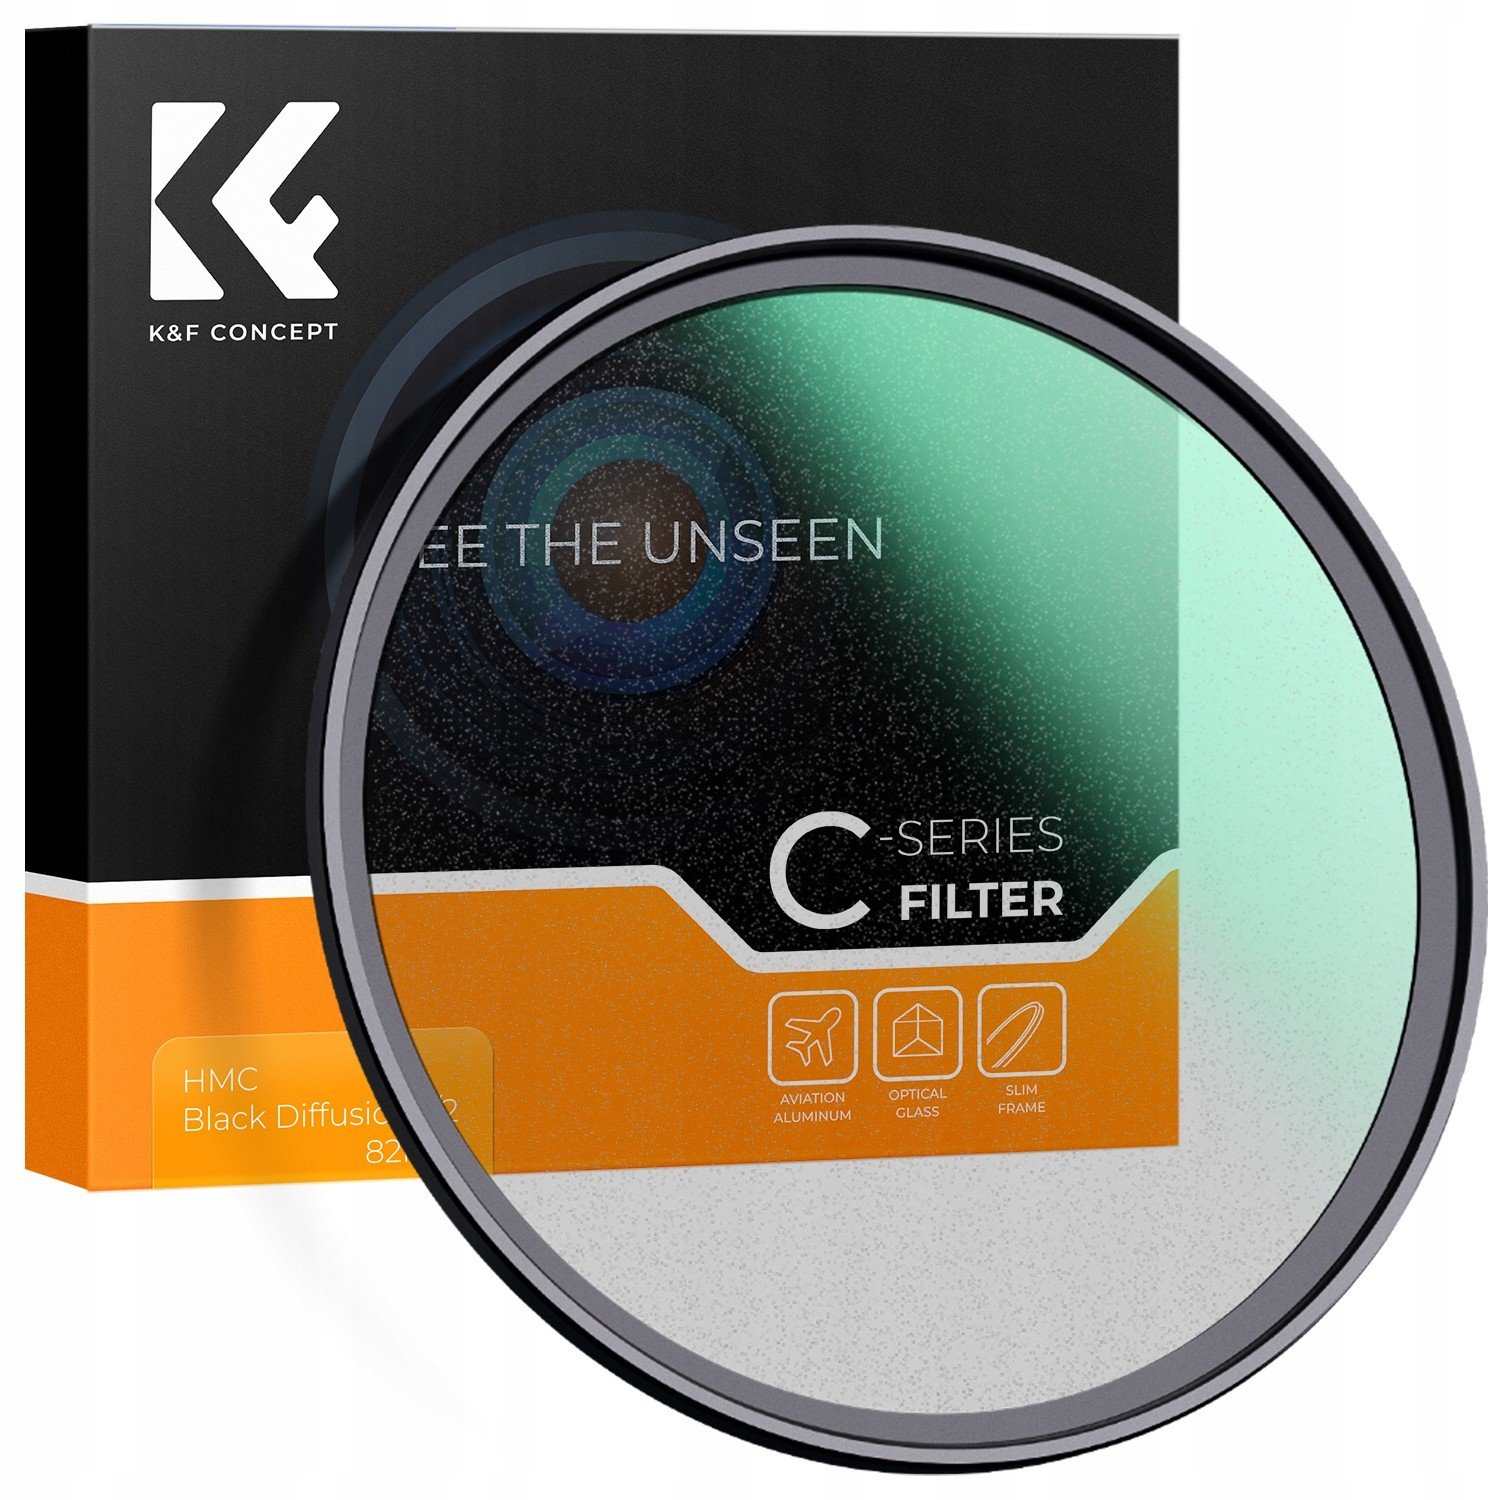 Difuzní filtr Black Mist 1/2 72mm Nano-C K&f